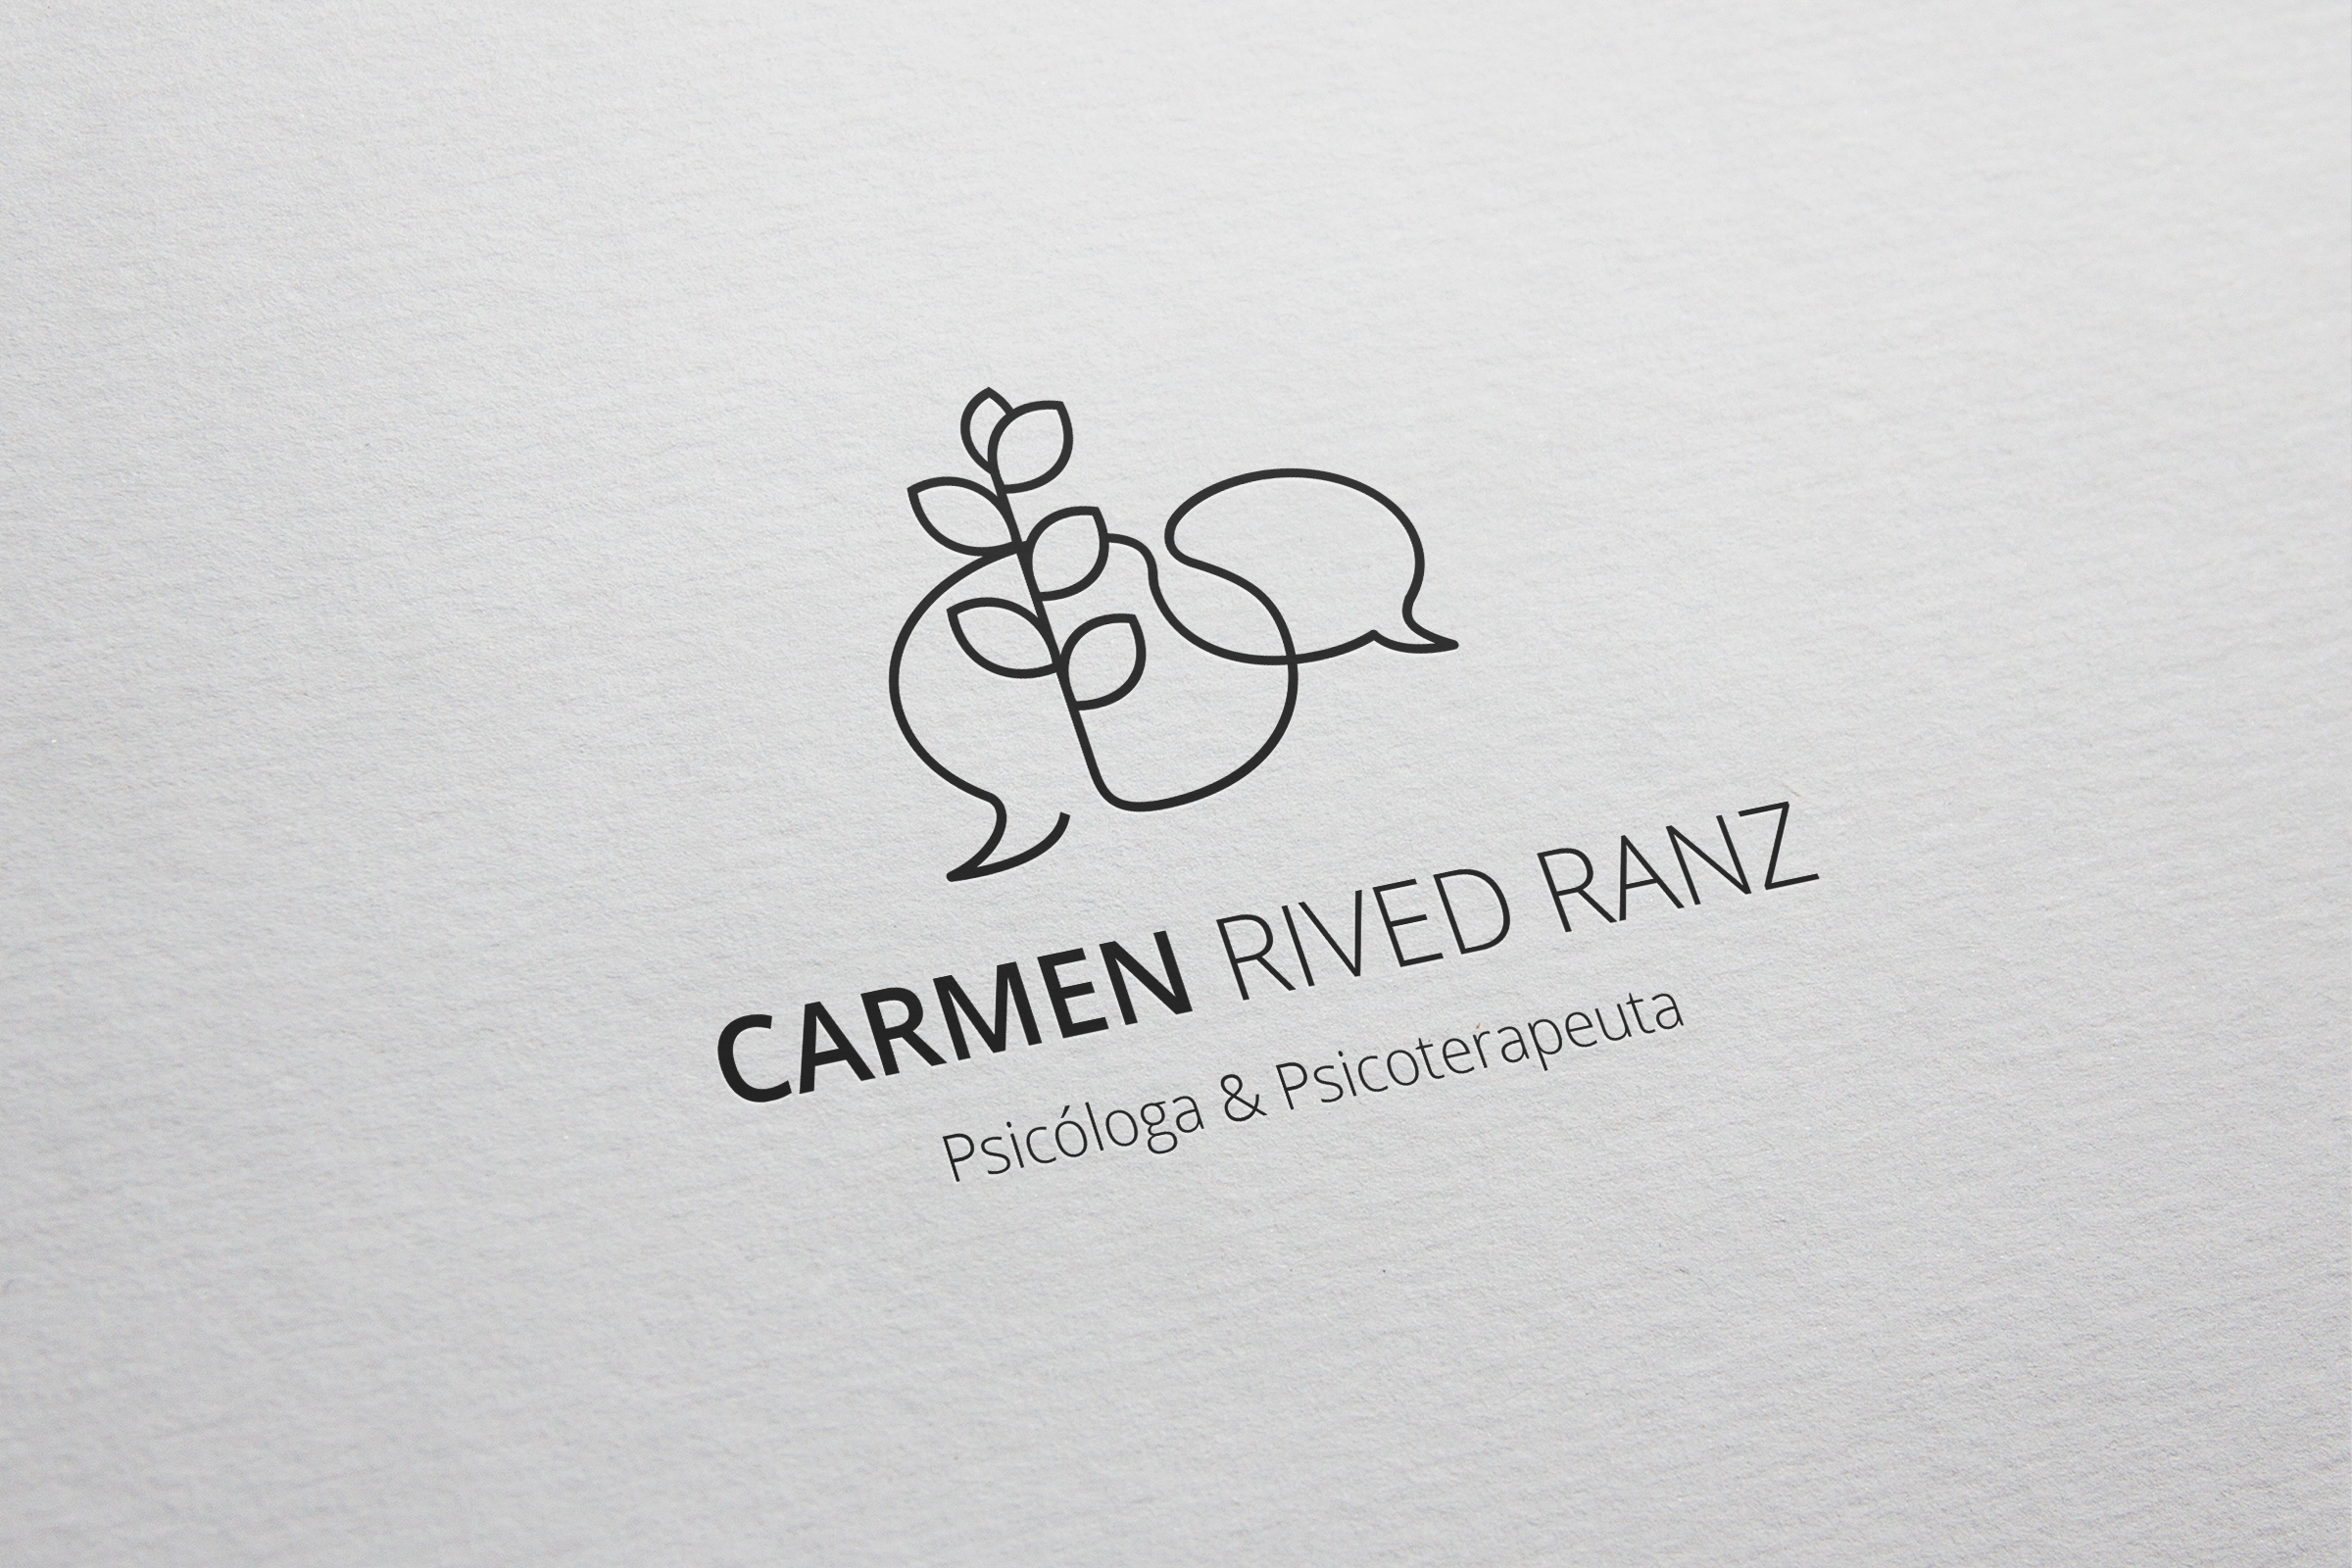 En este momento estás viendo Branding Carmen Rived Ranz, Psicóloga & Psicoterapeuta